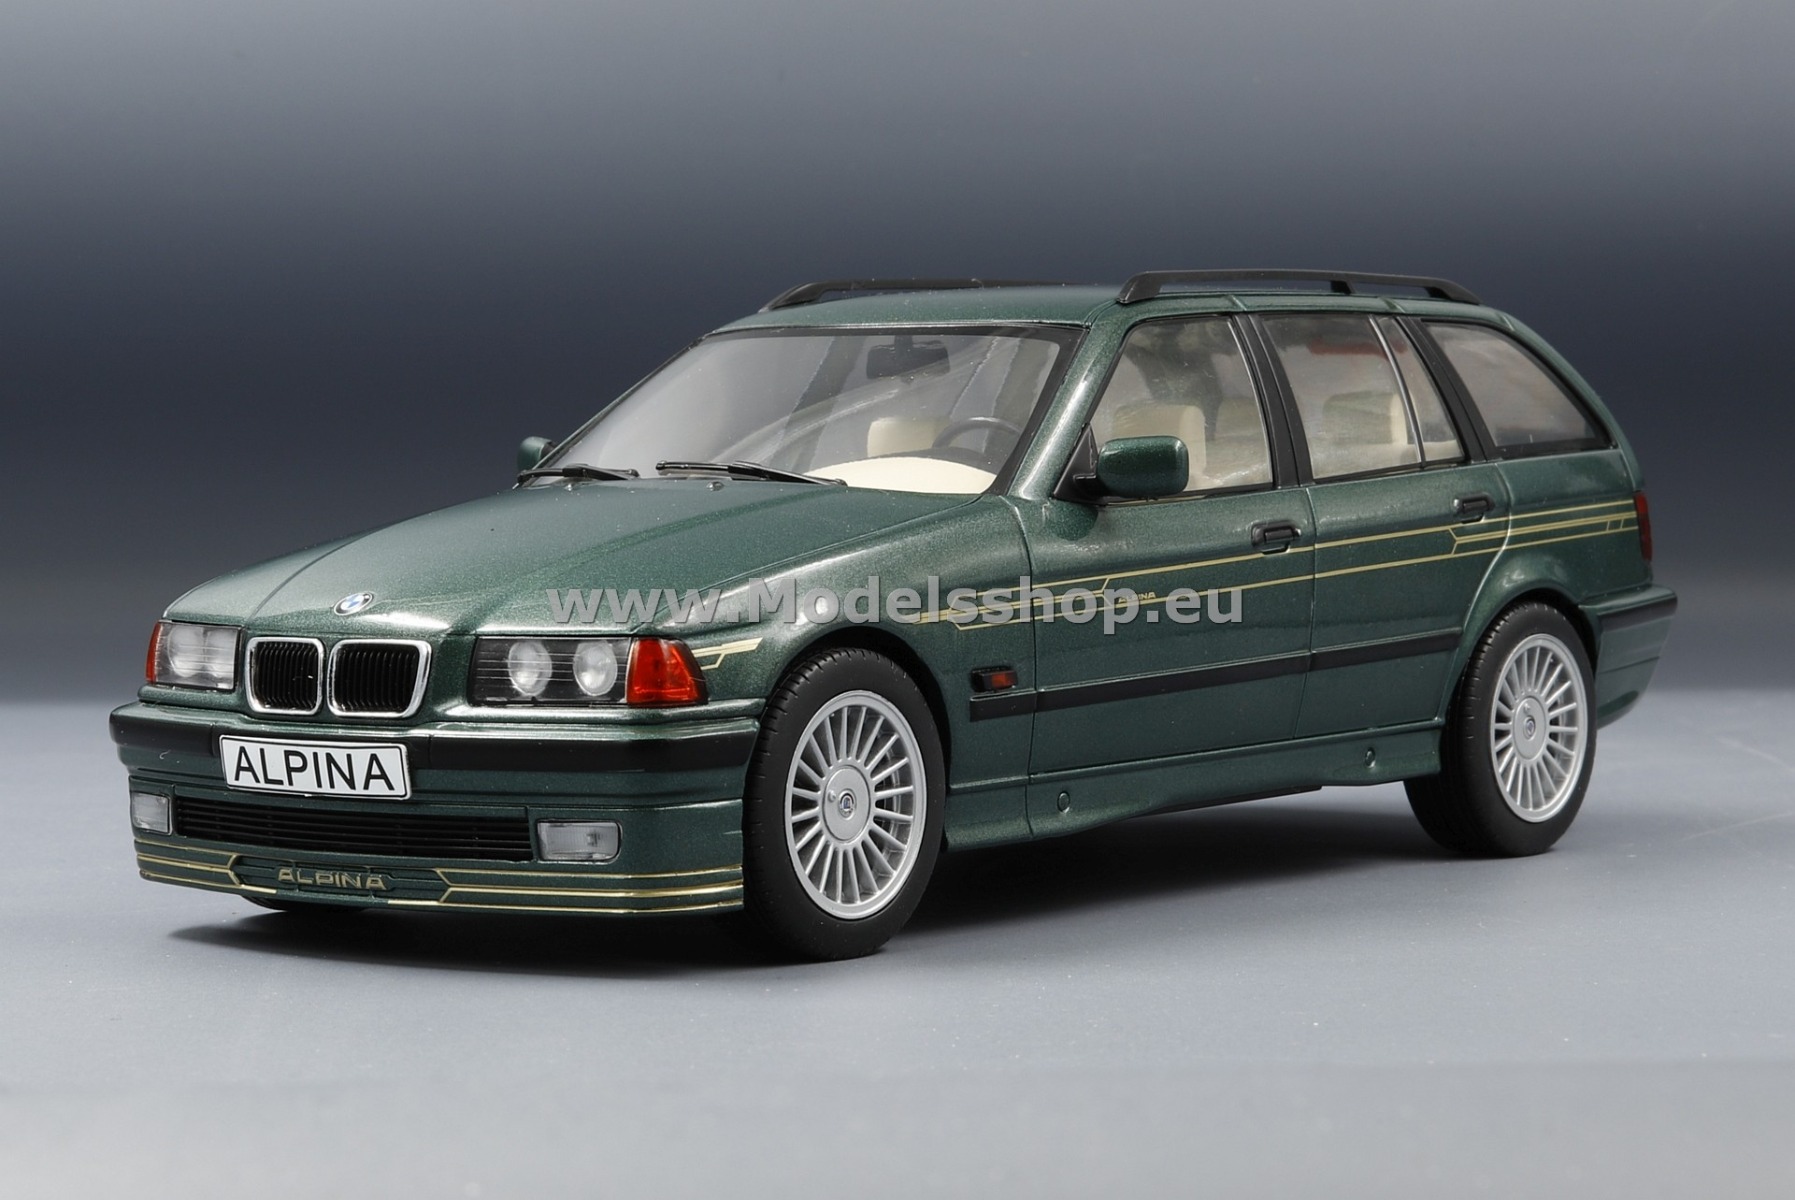 BMW Alpina B3 3.2 Touring,  Basis: E36, 1995 /green - metallic/